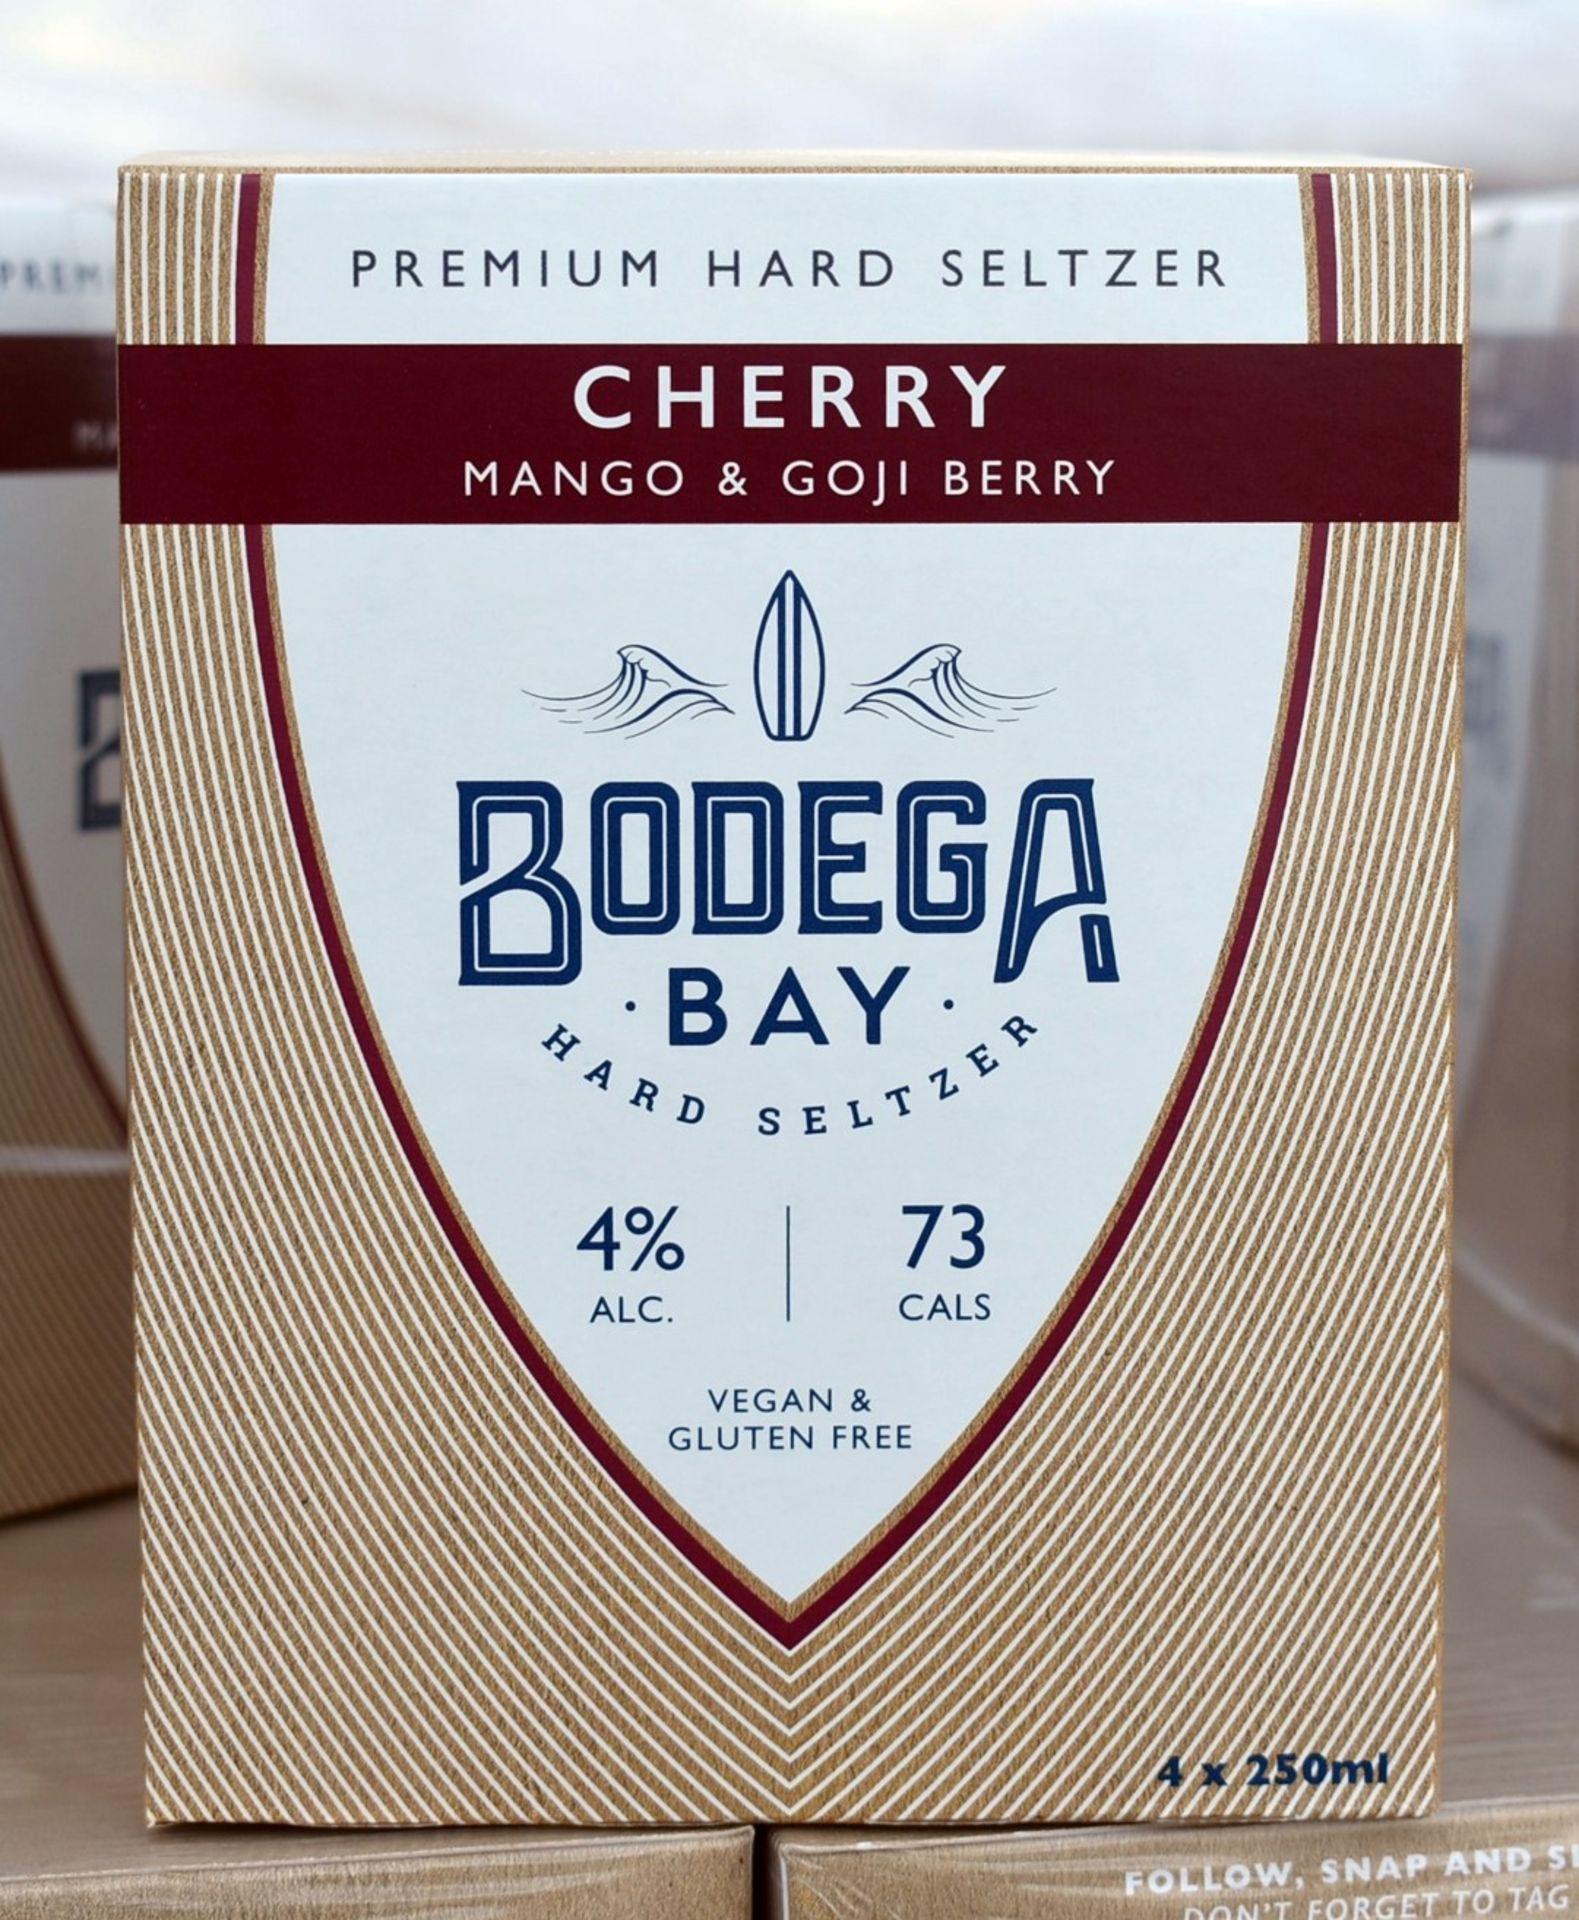 24 x Bodega Bay Hard Seltzer 250ml Alcoholic Sparkling Water Drinks - Cherry Mango & Goji Berry - Image 4 of 7